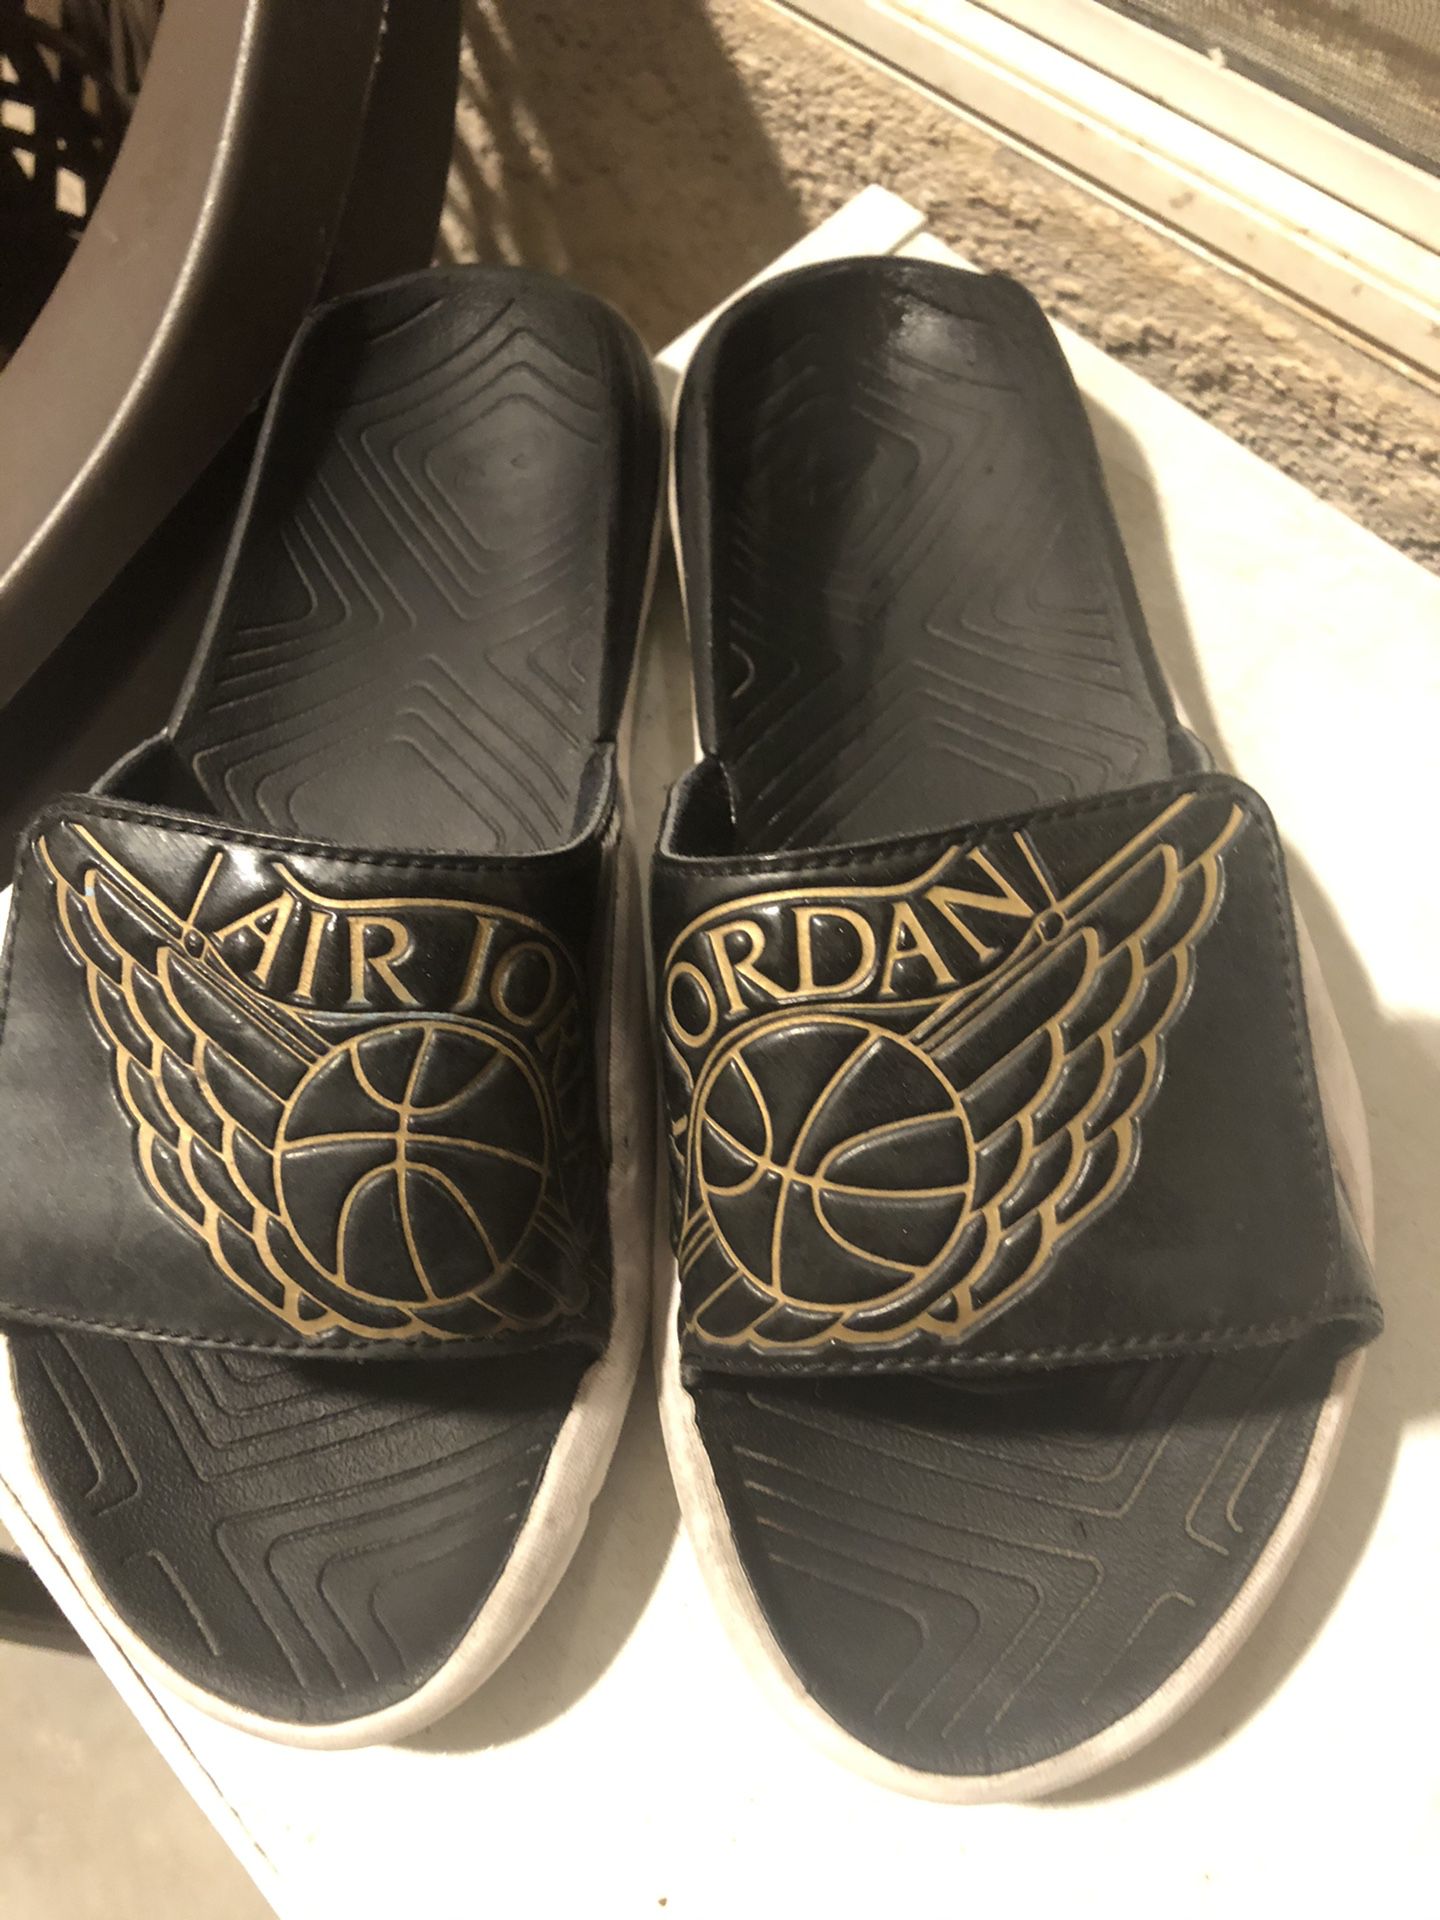 Boys Jordan sandals